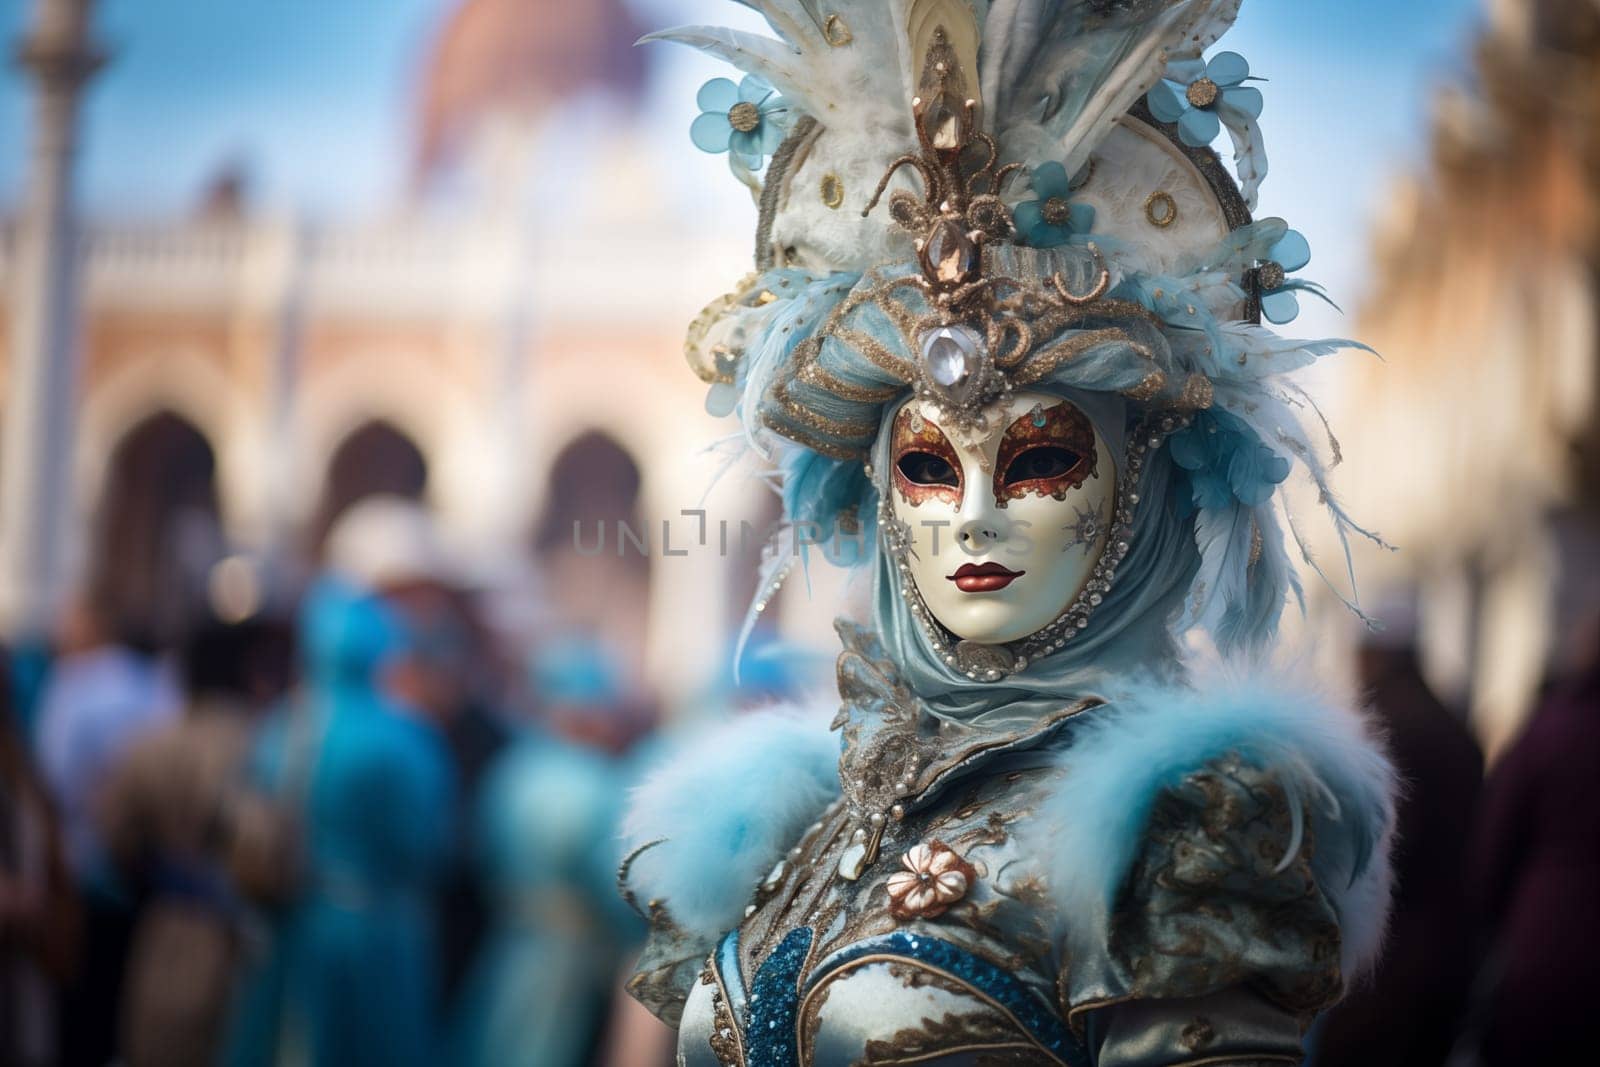 Elegant Venice Carnival Costume in Iconic Setting by dimol